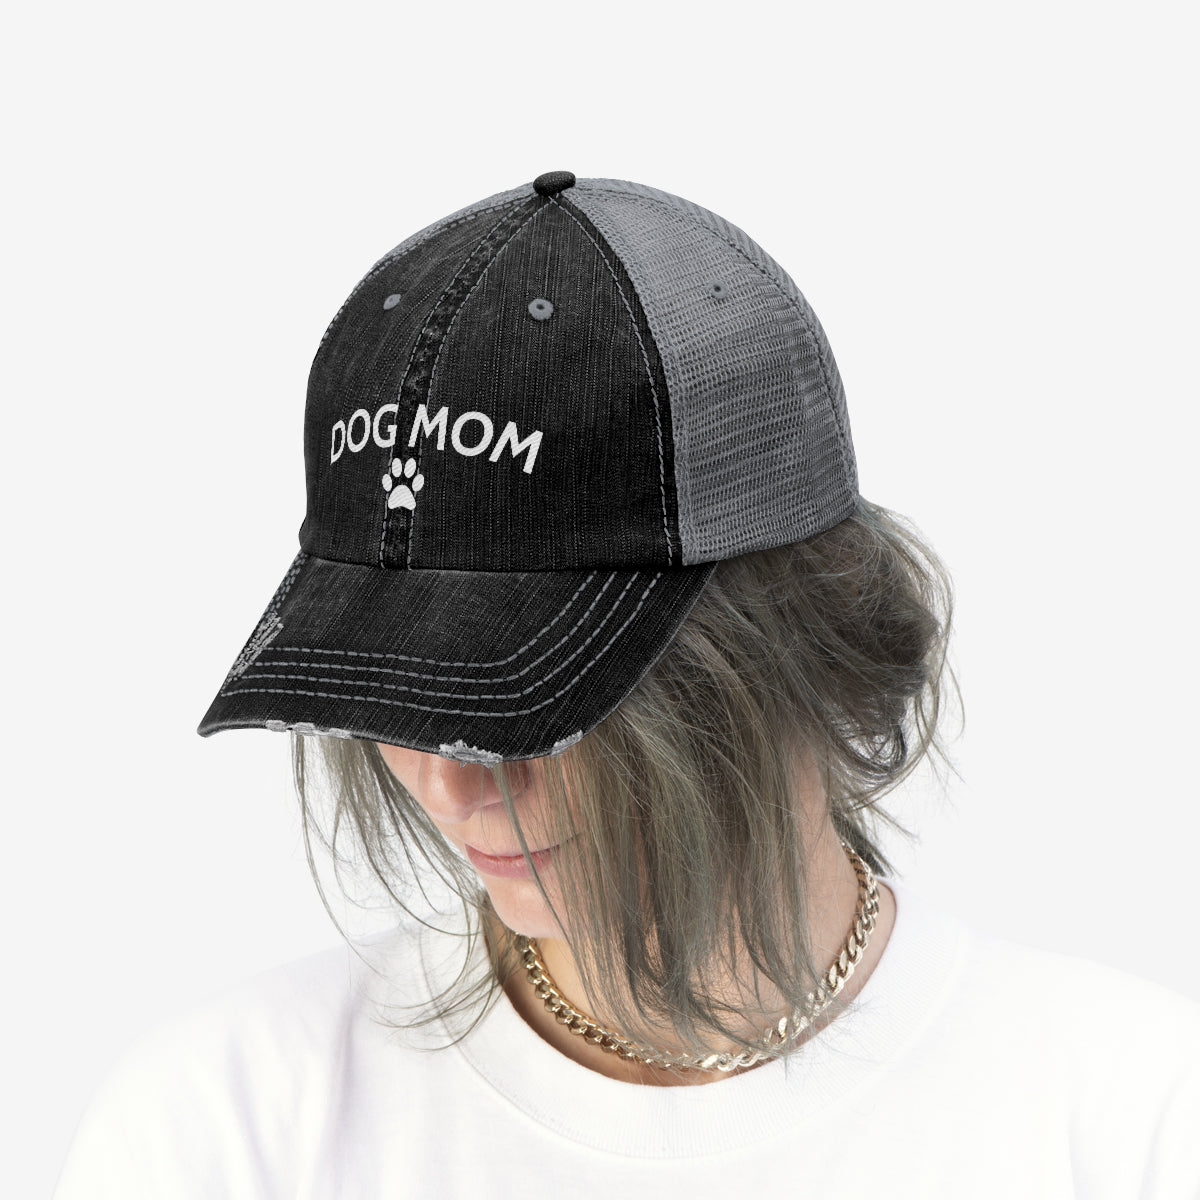 Dog Mom - Unisex Trucker Hat